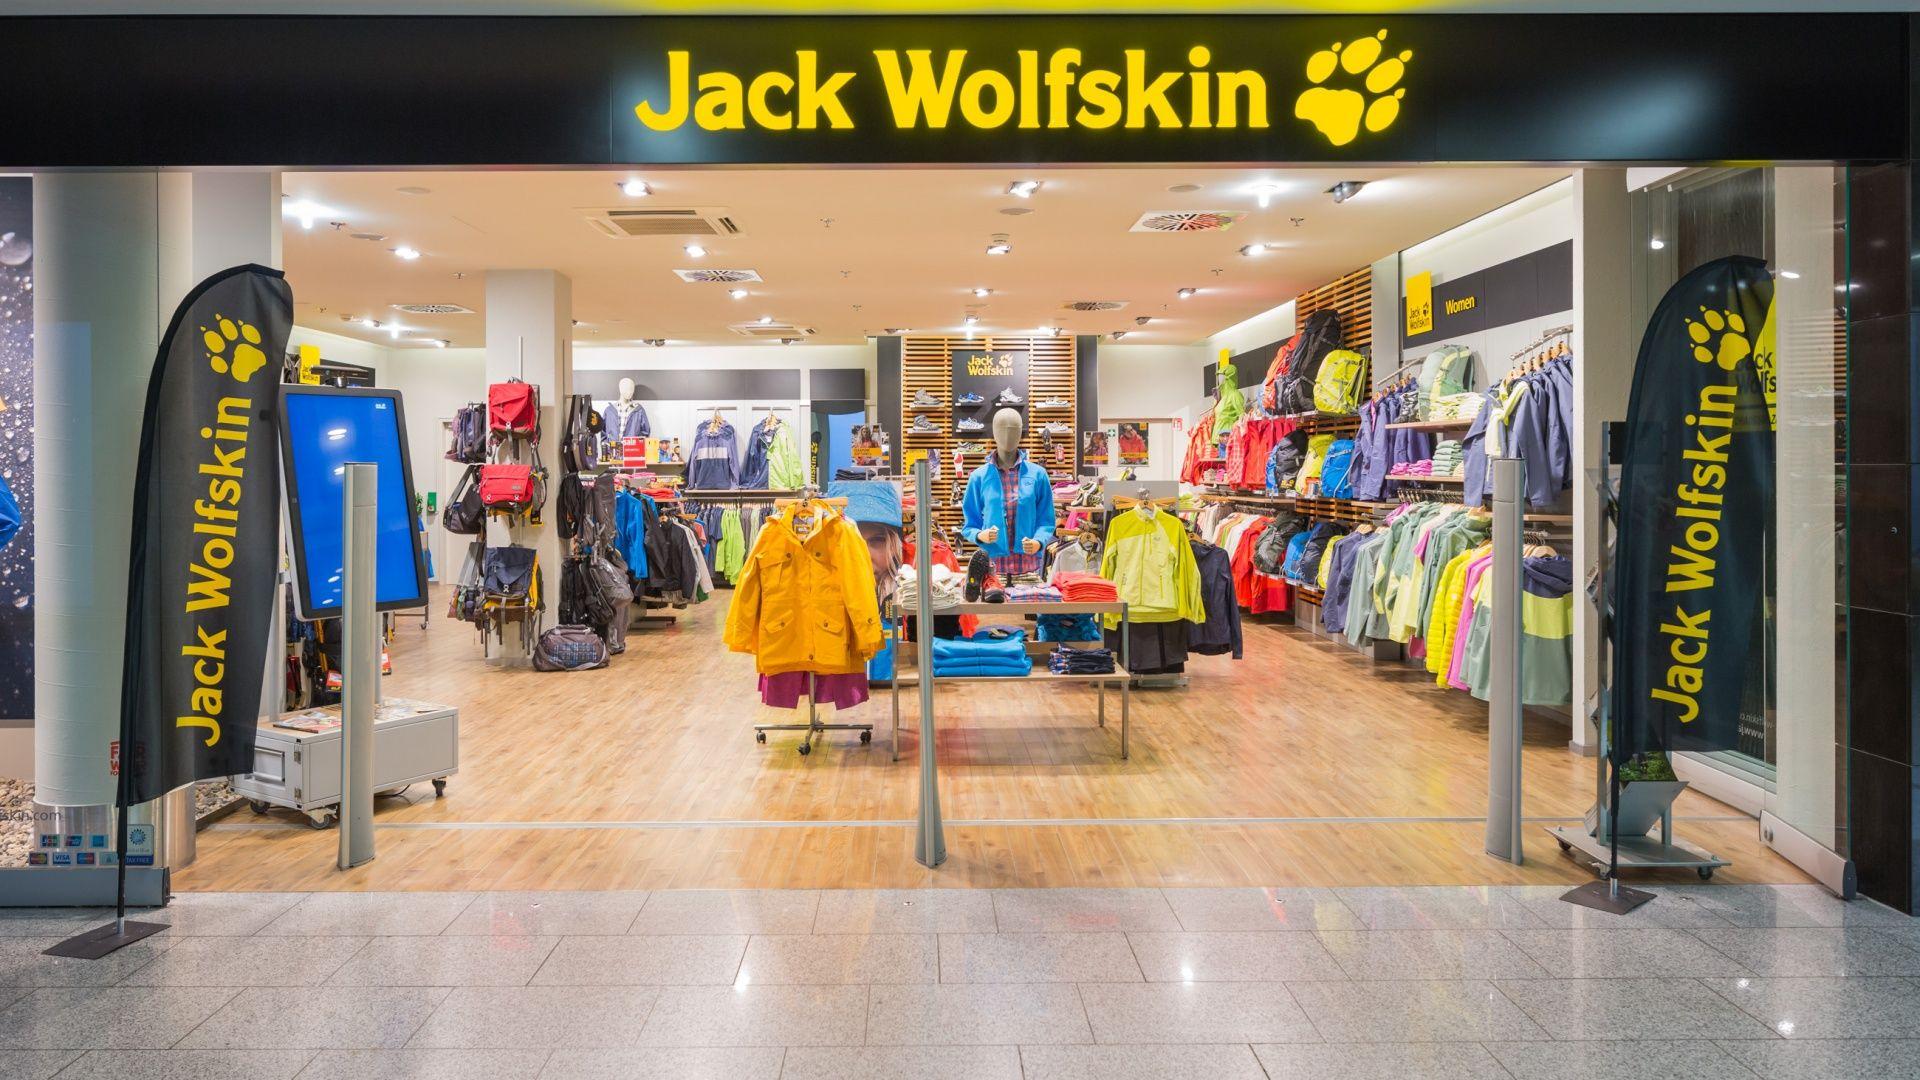 Jack Wolfskin Logo - Jack Wolfskin